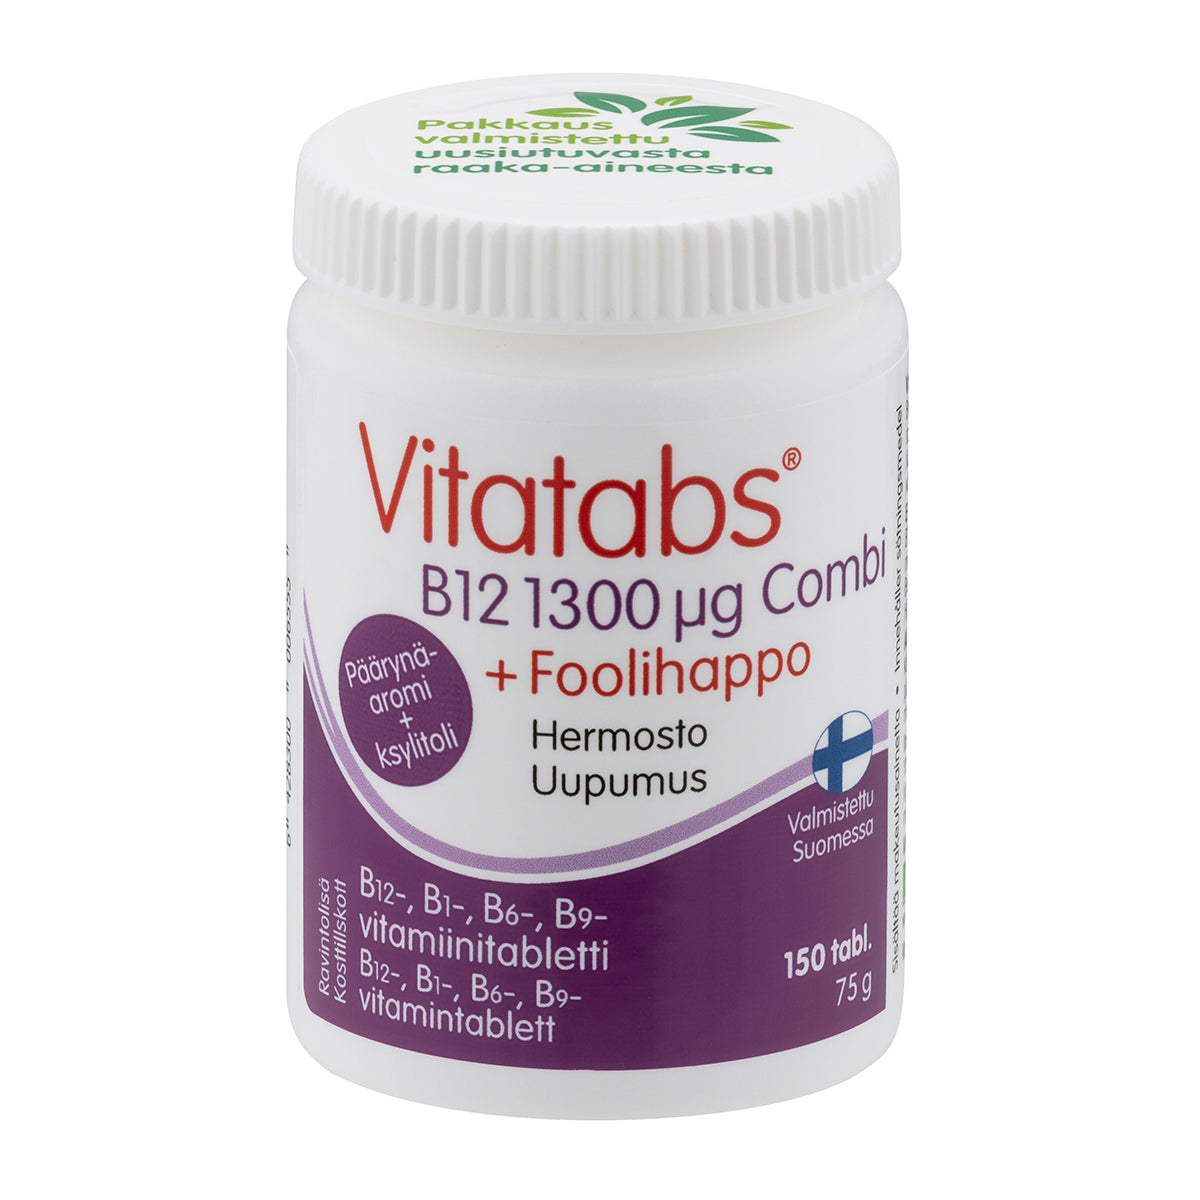 Vitatabs B12 1300 µg Combi + Foolihappo 150 tabl.